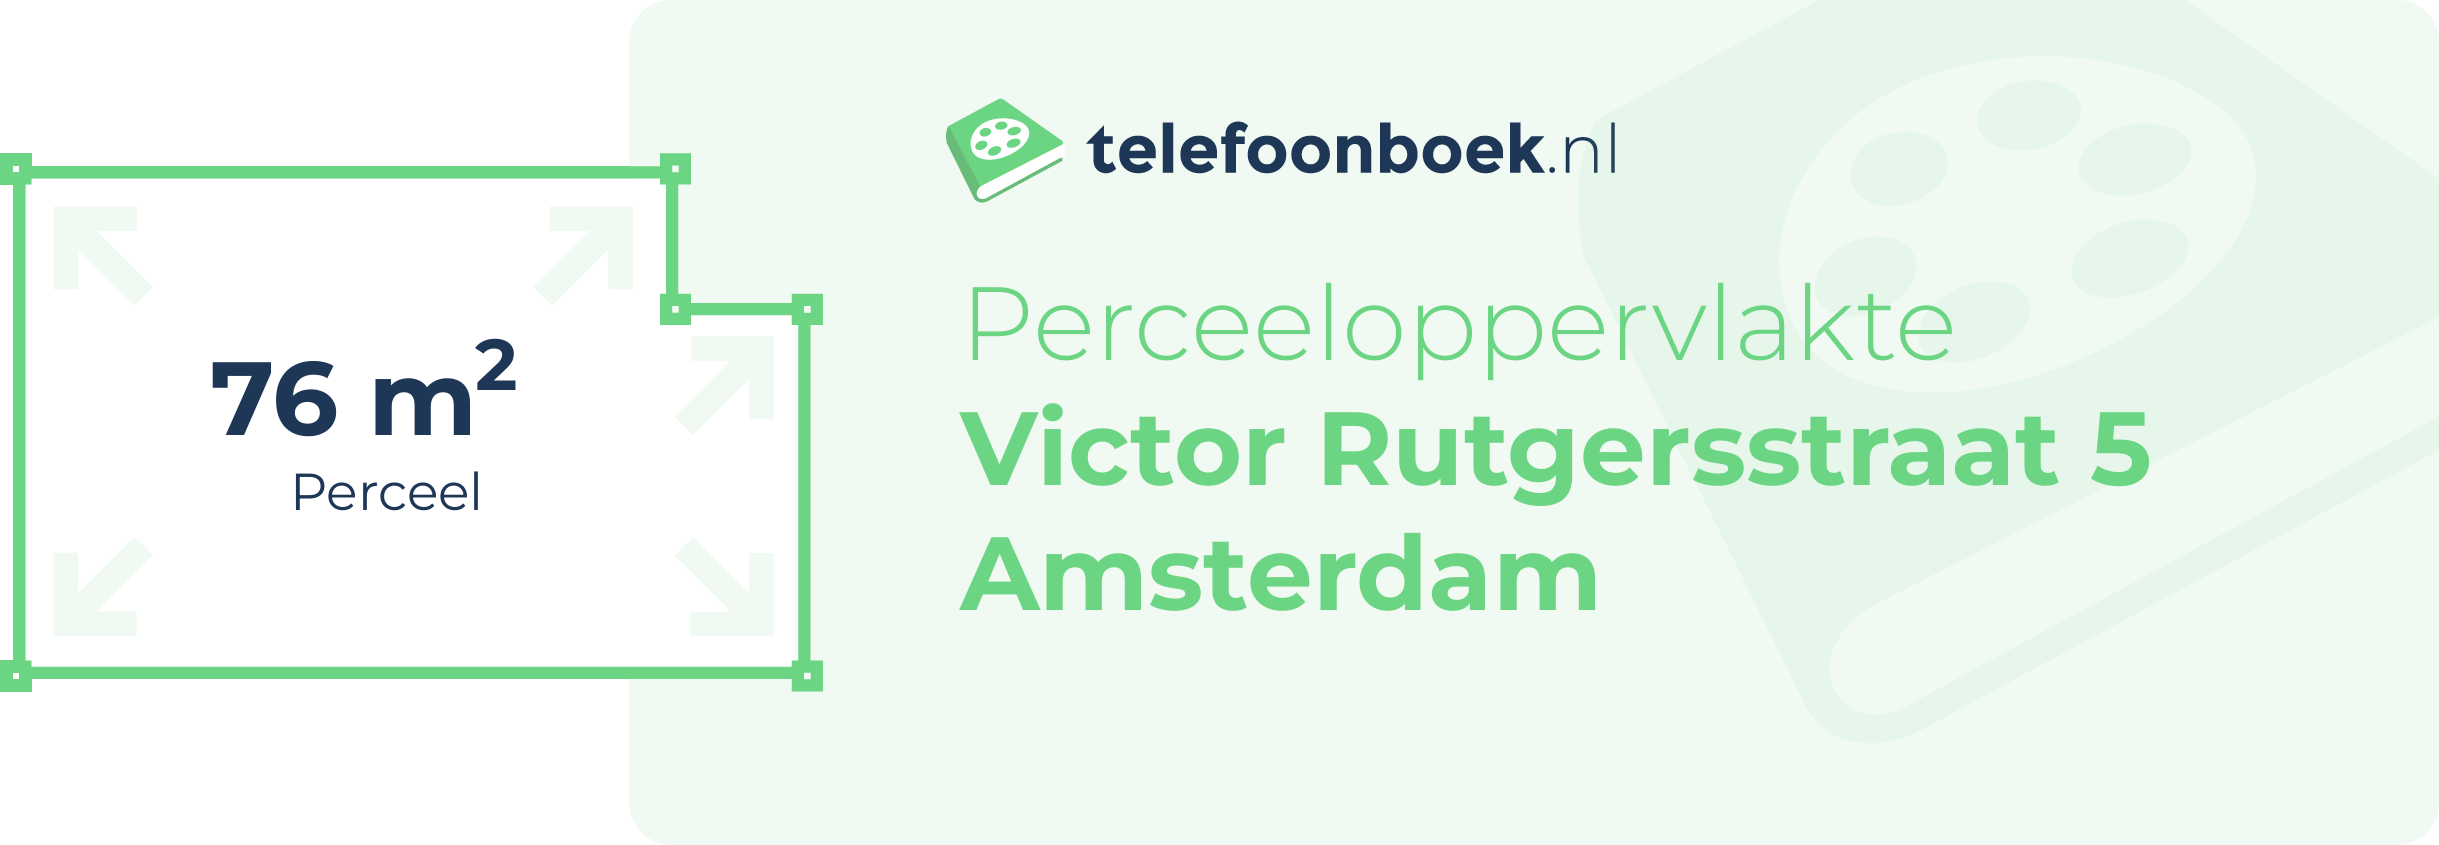 Perceeloppervlakte Victor Rutgersstraat 5 Amsterdam